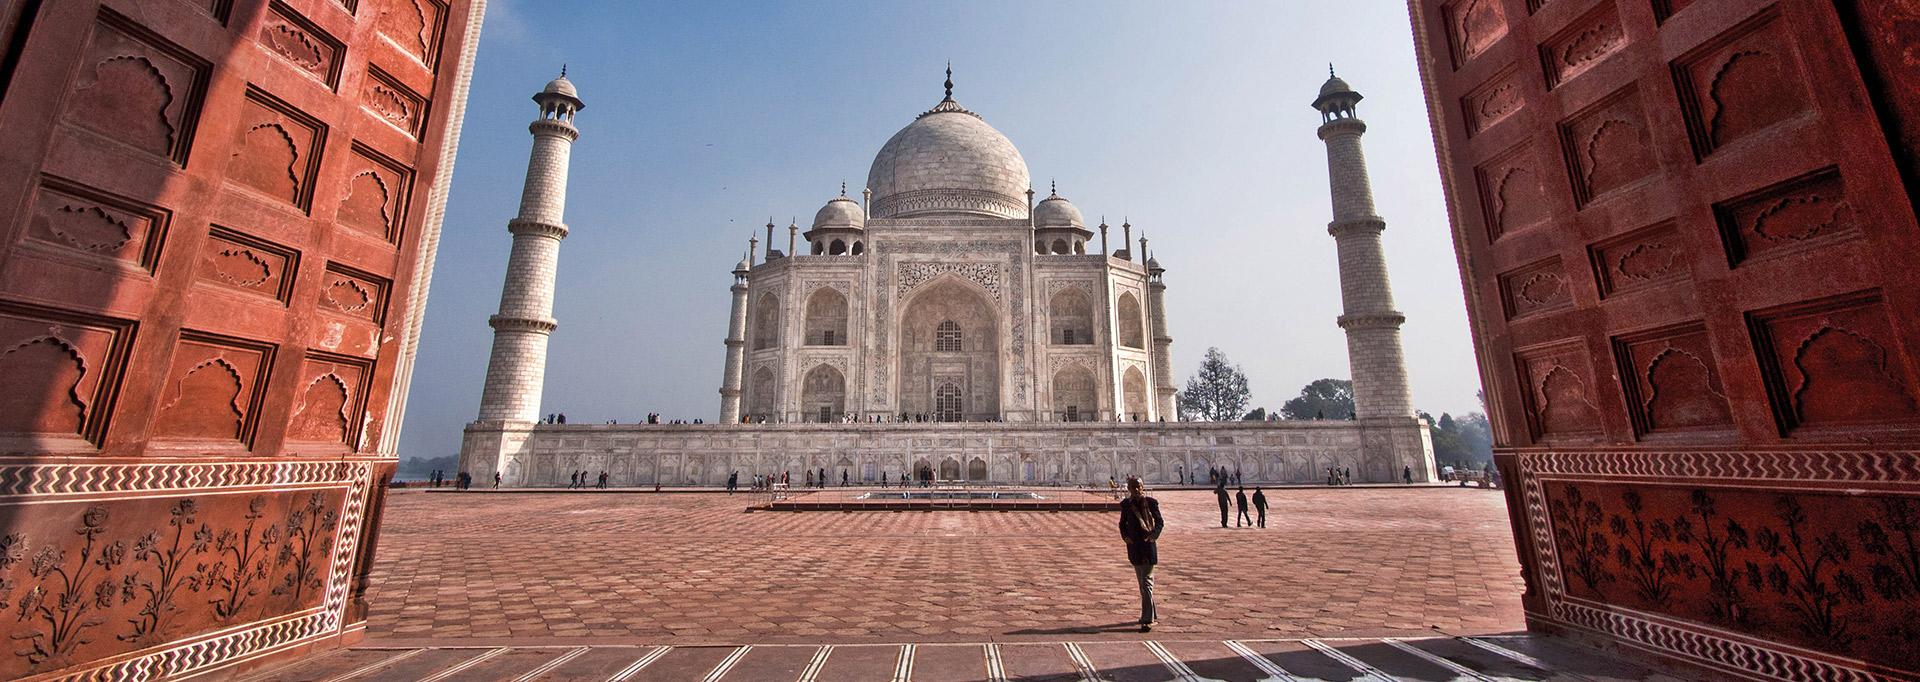 Get a complete and thorough Taj Mahal Tour Guide here